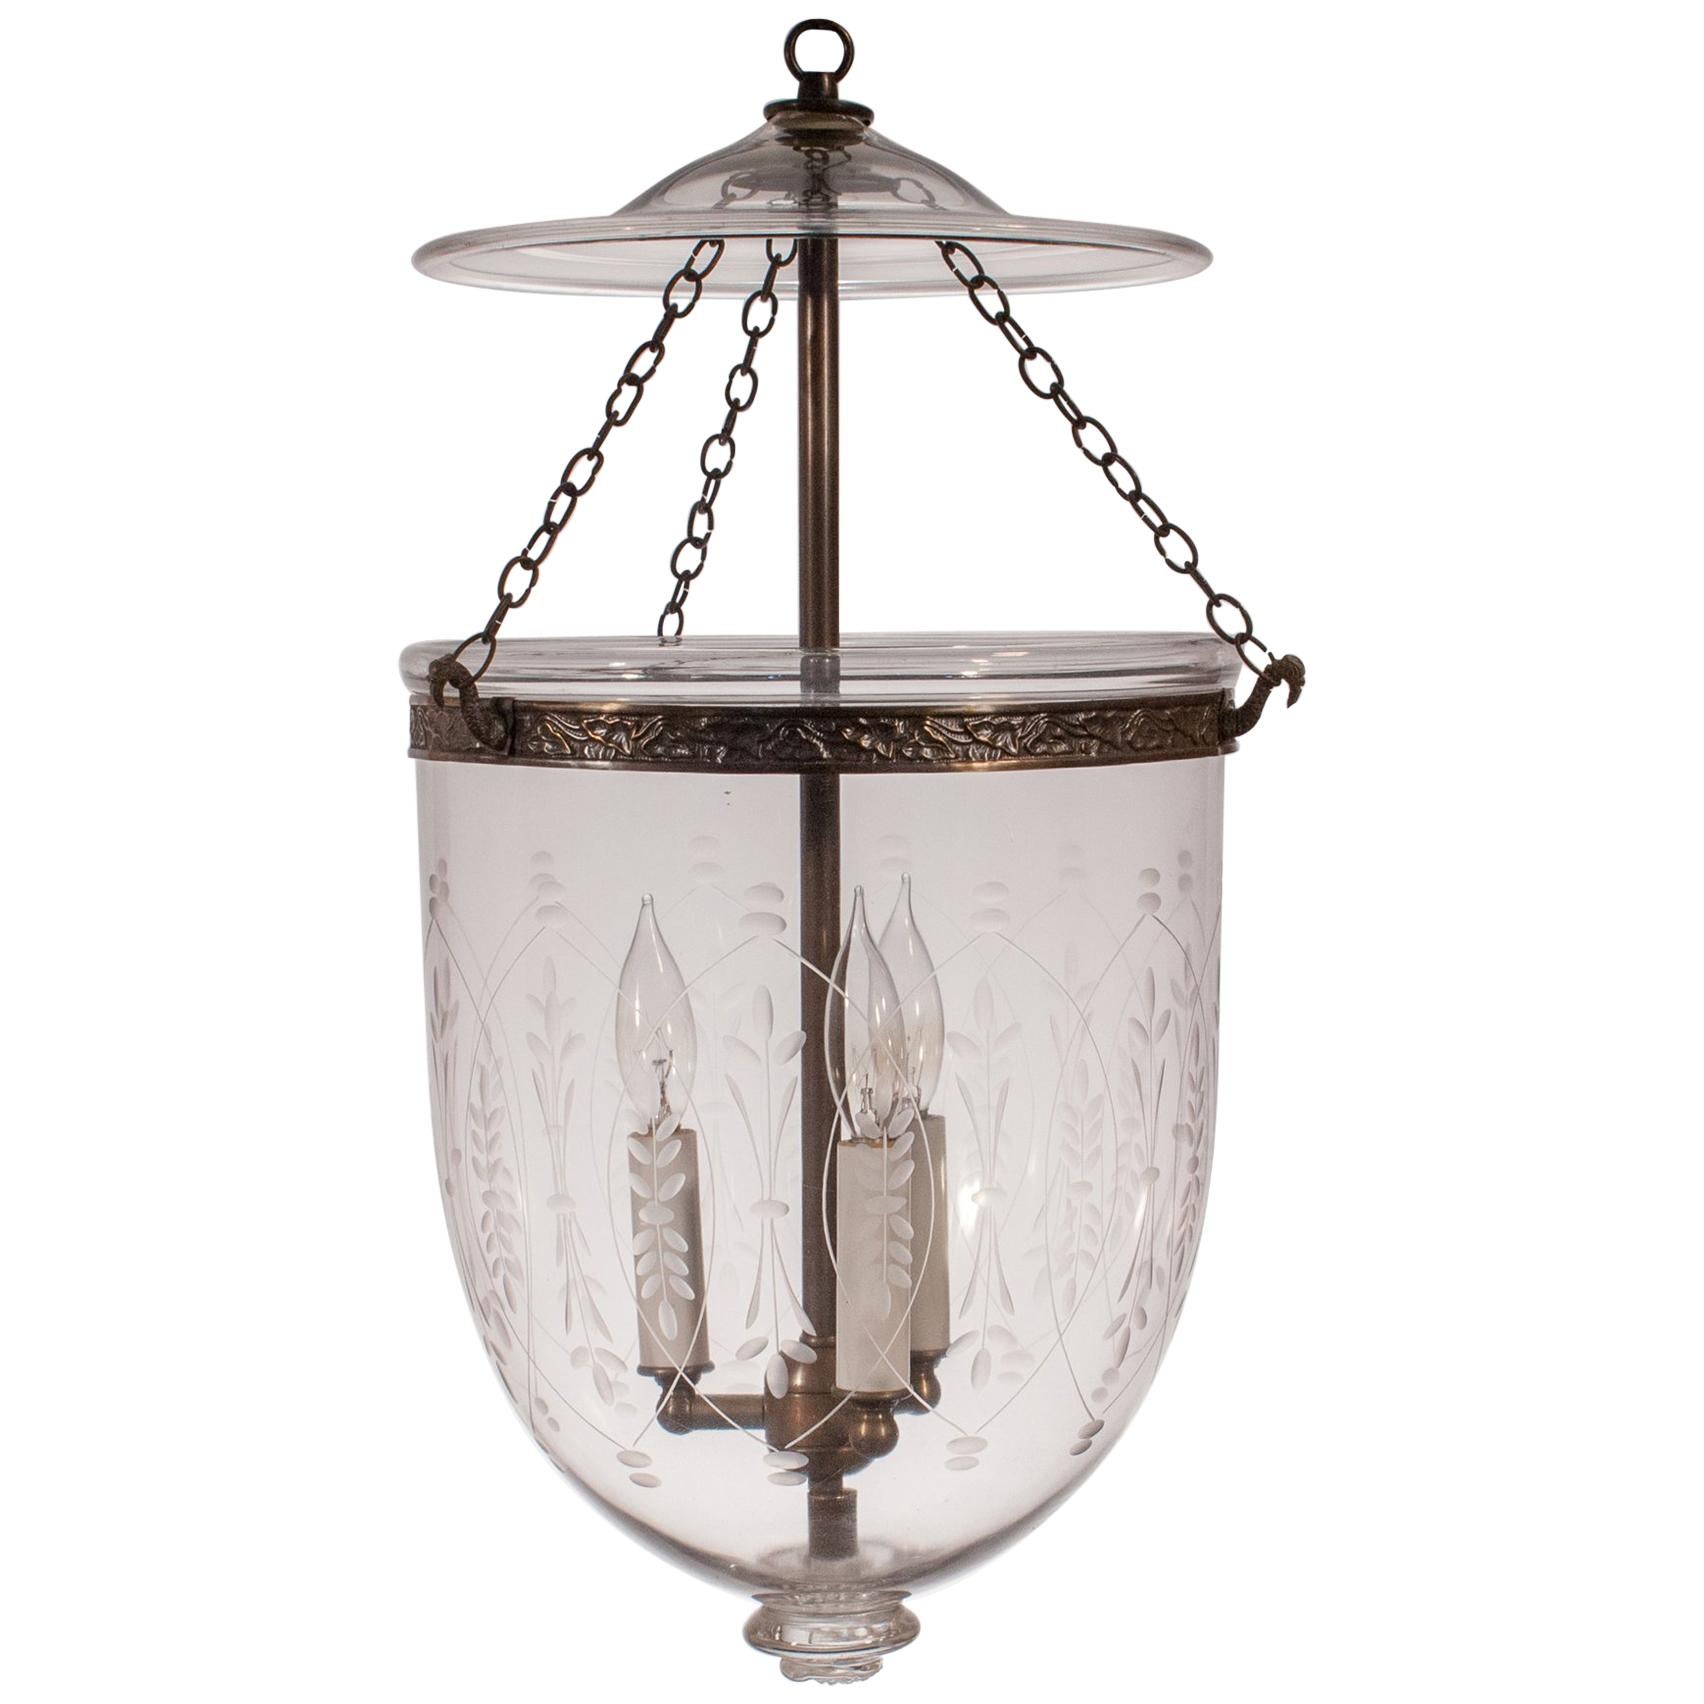 Bell Jar Lantern with Wheat Etching